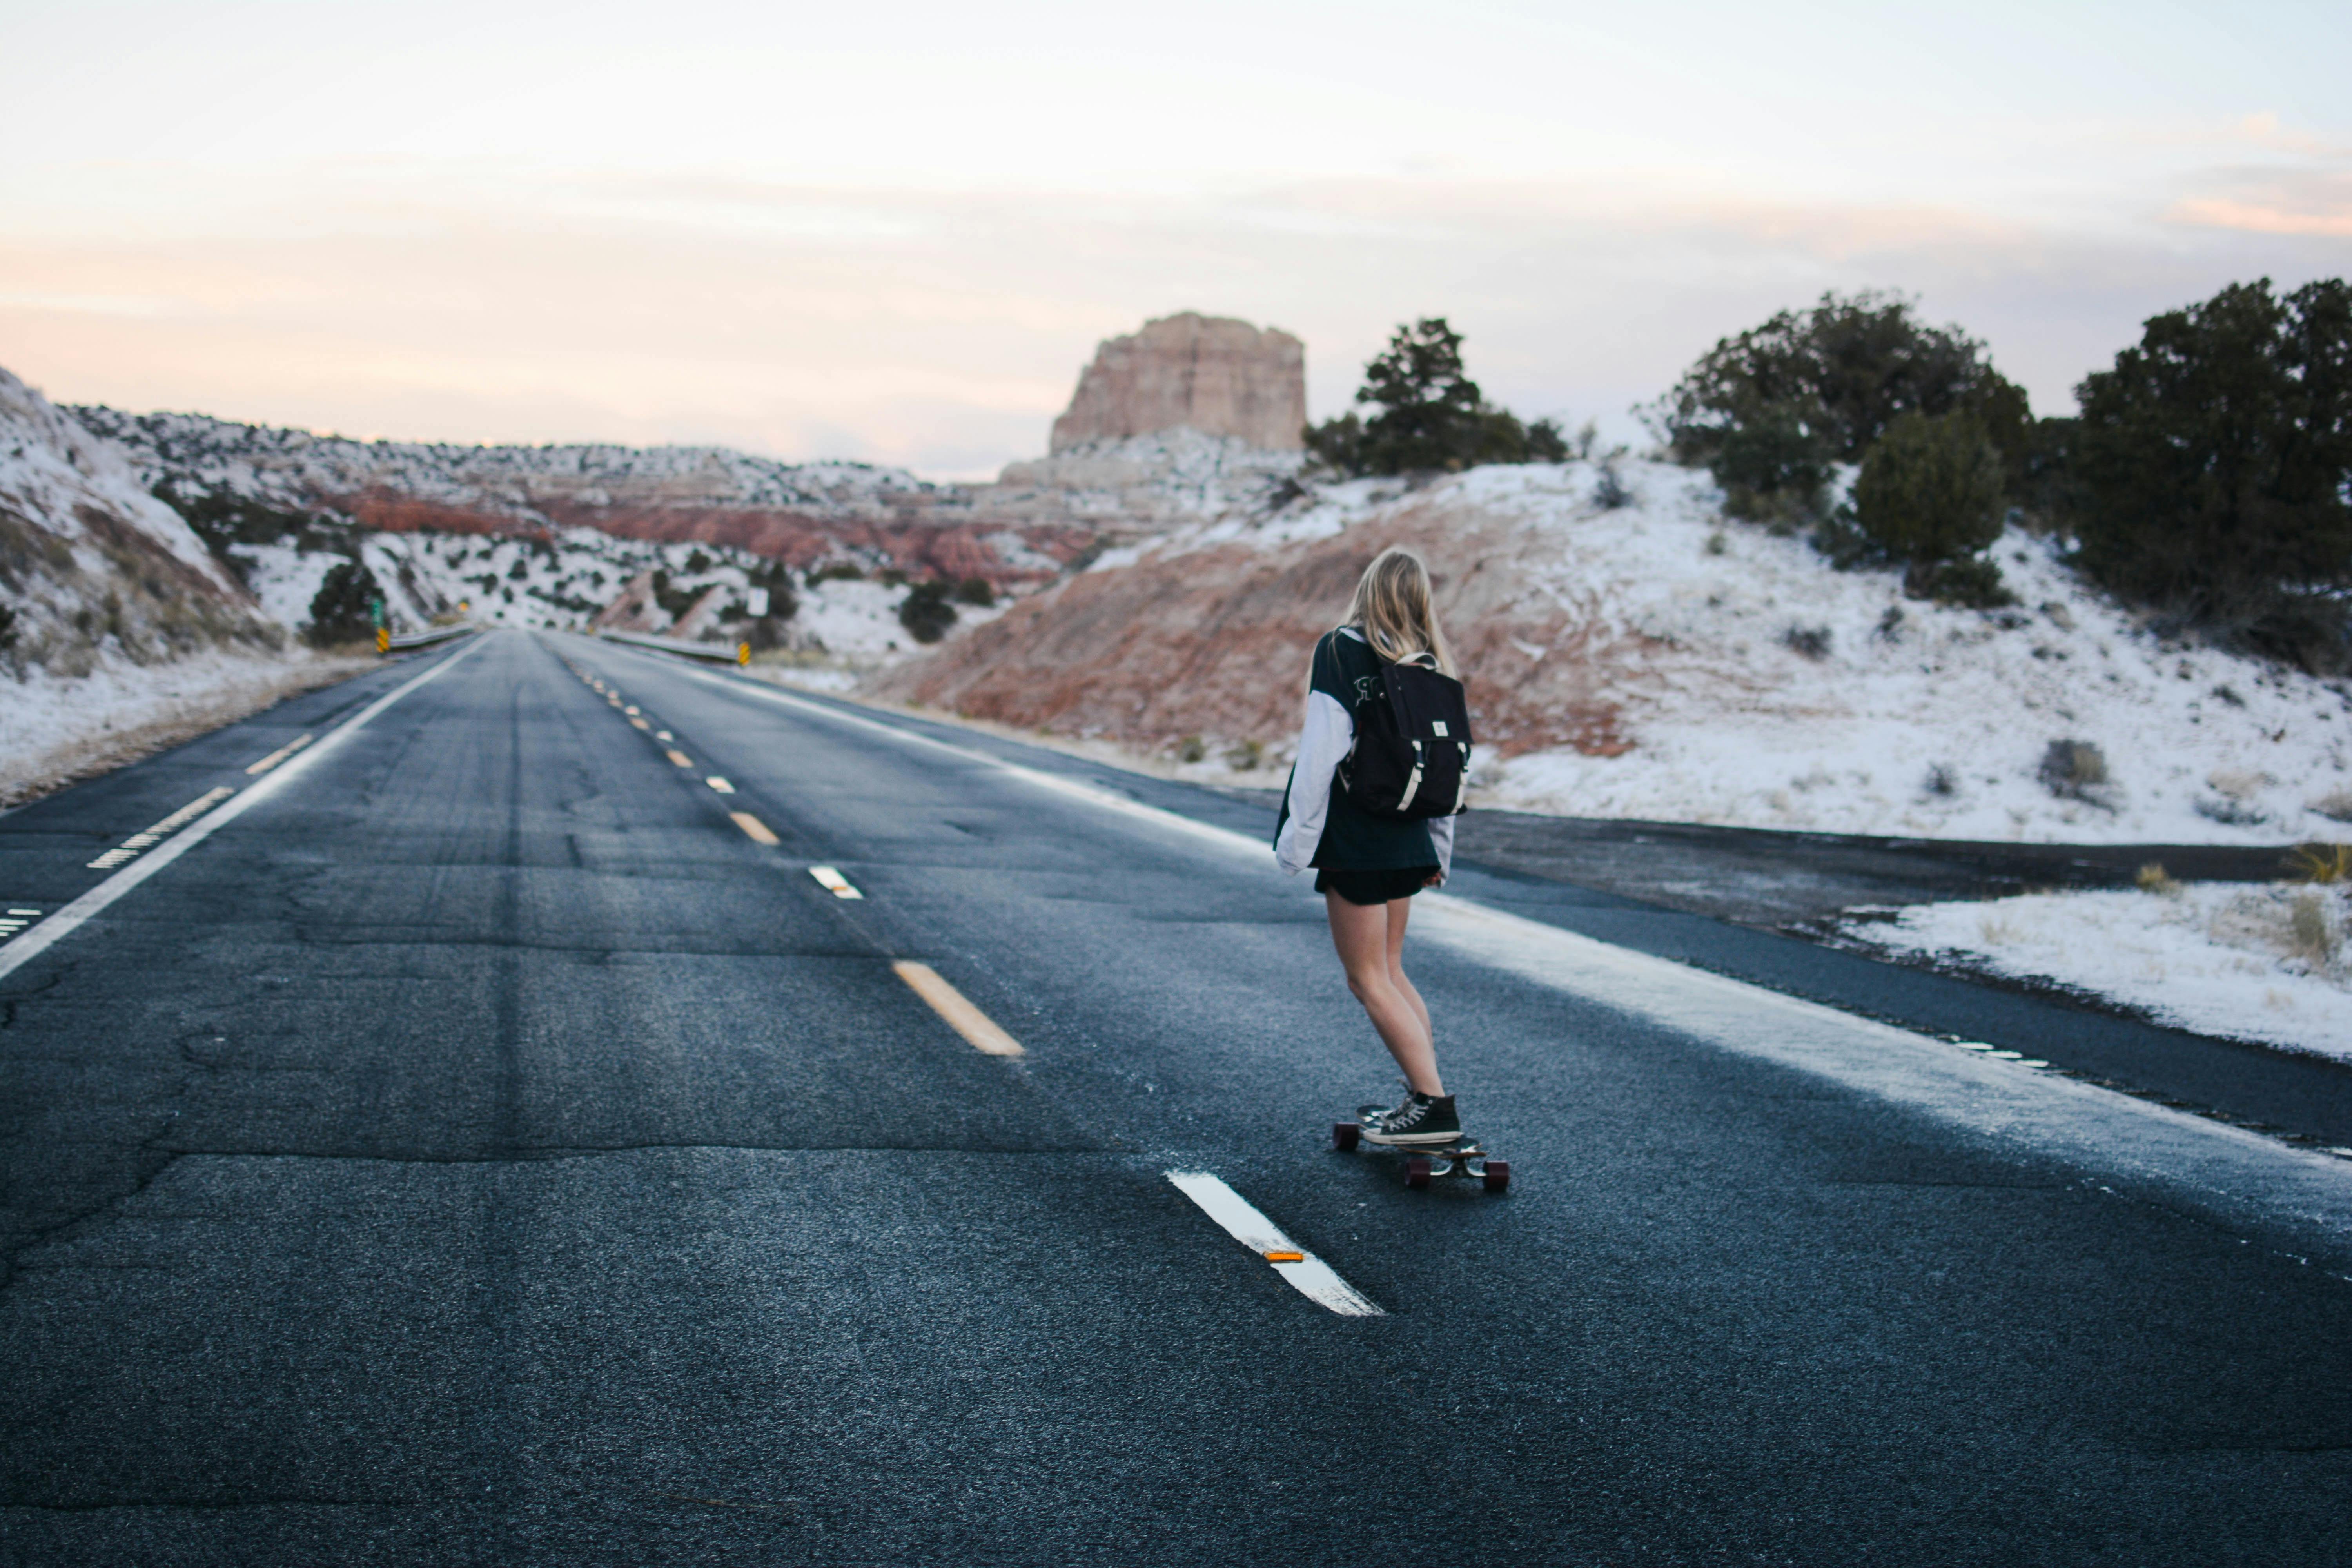 A woman on a skateboard. | Photo: Pexels